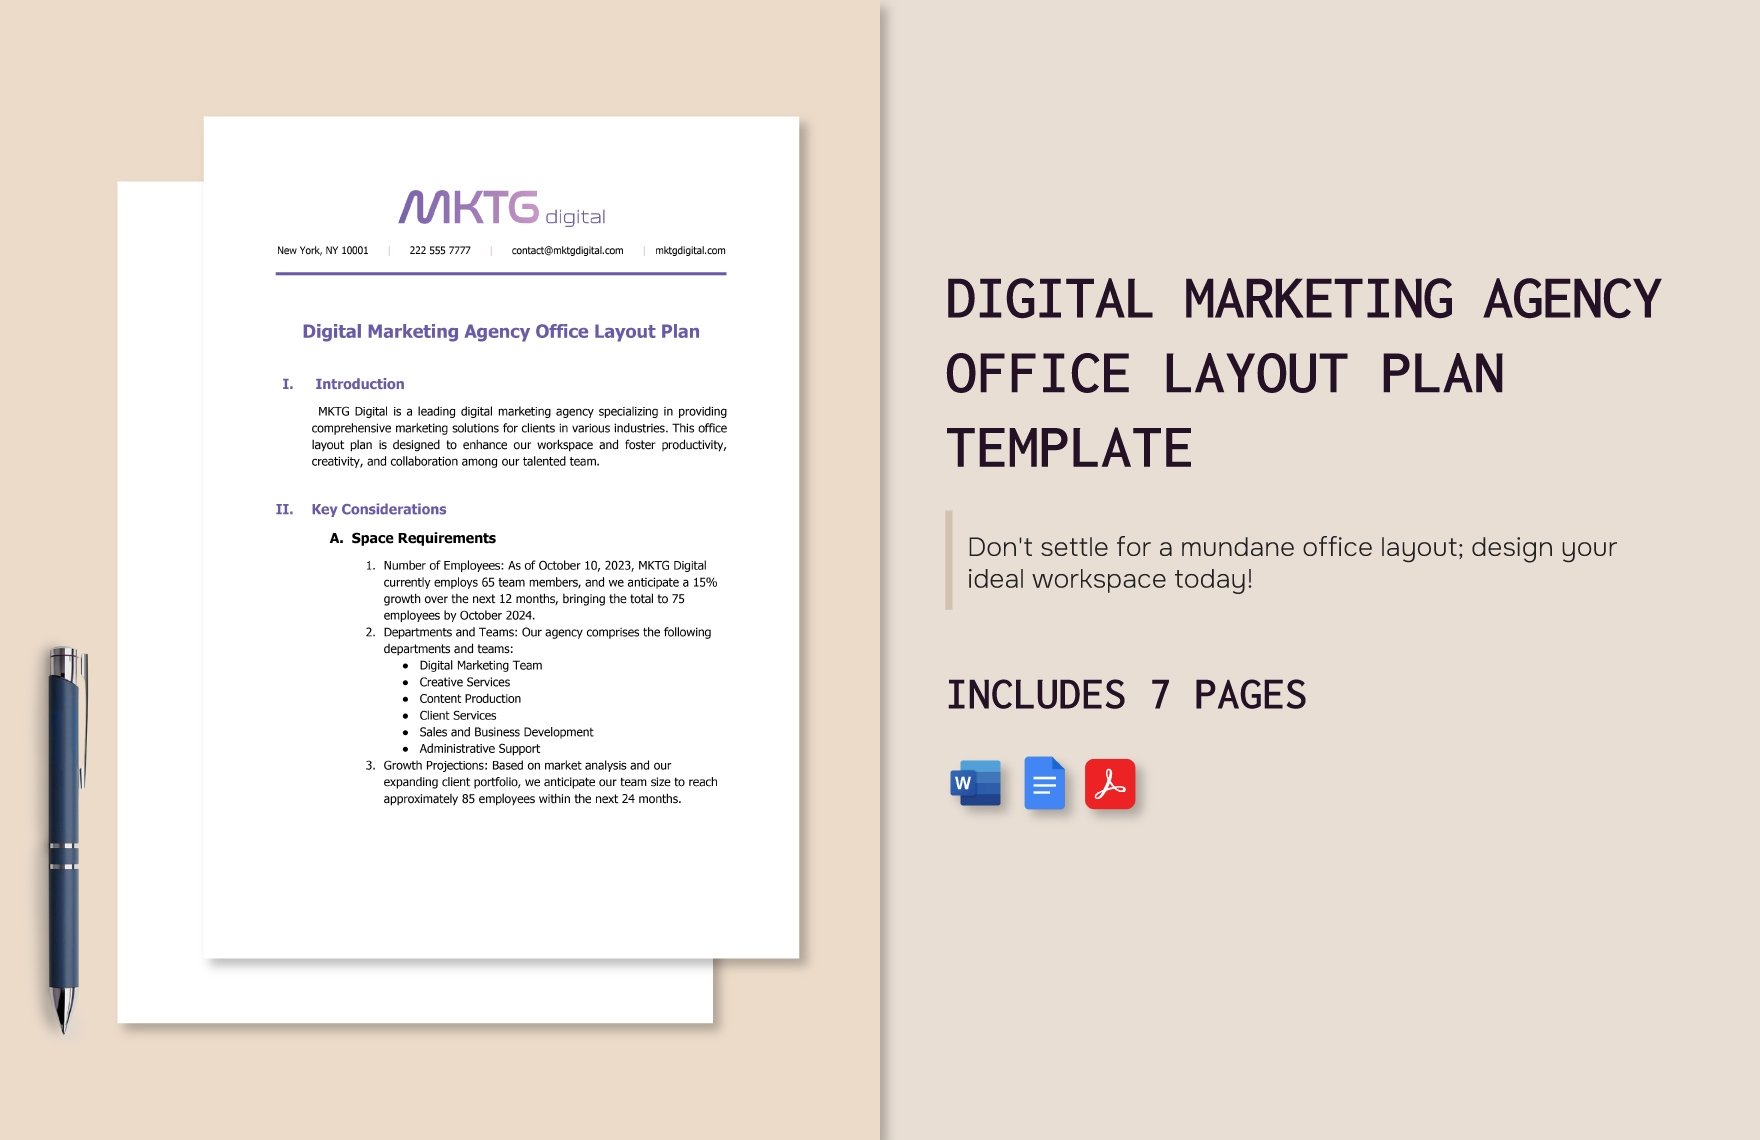 Digital Marketing Agency Office Layout Plan Template